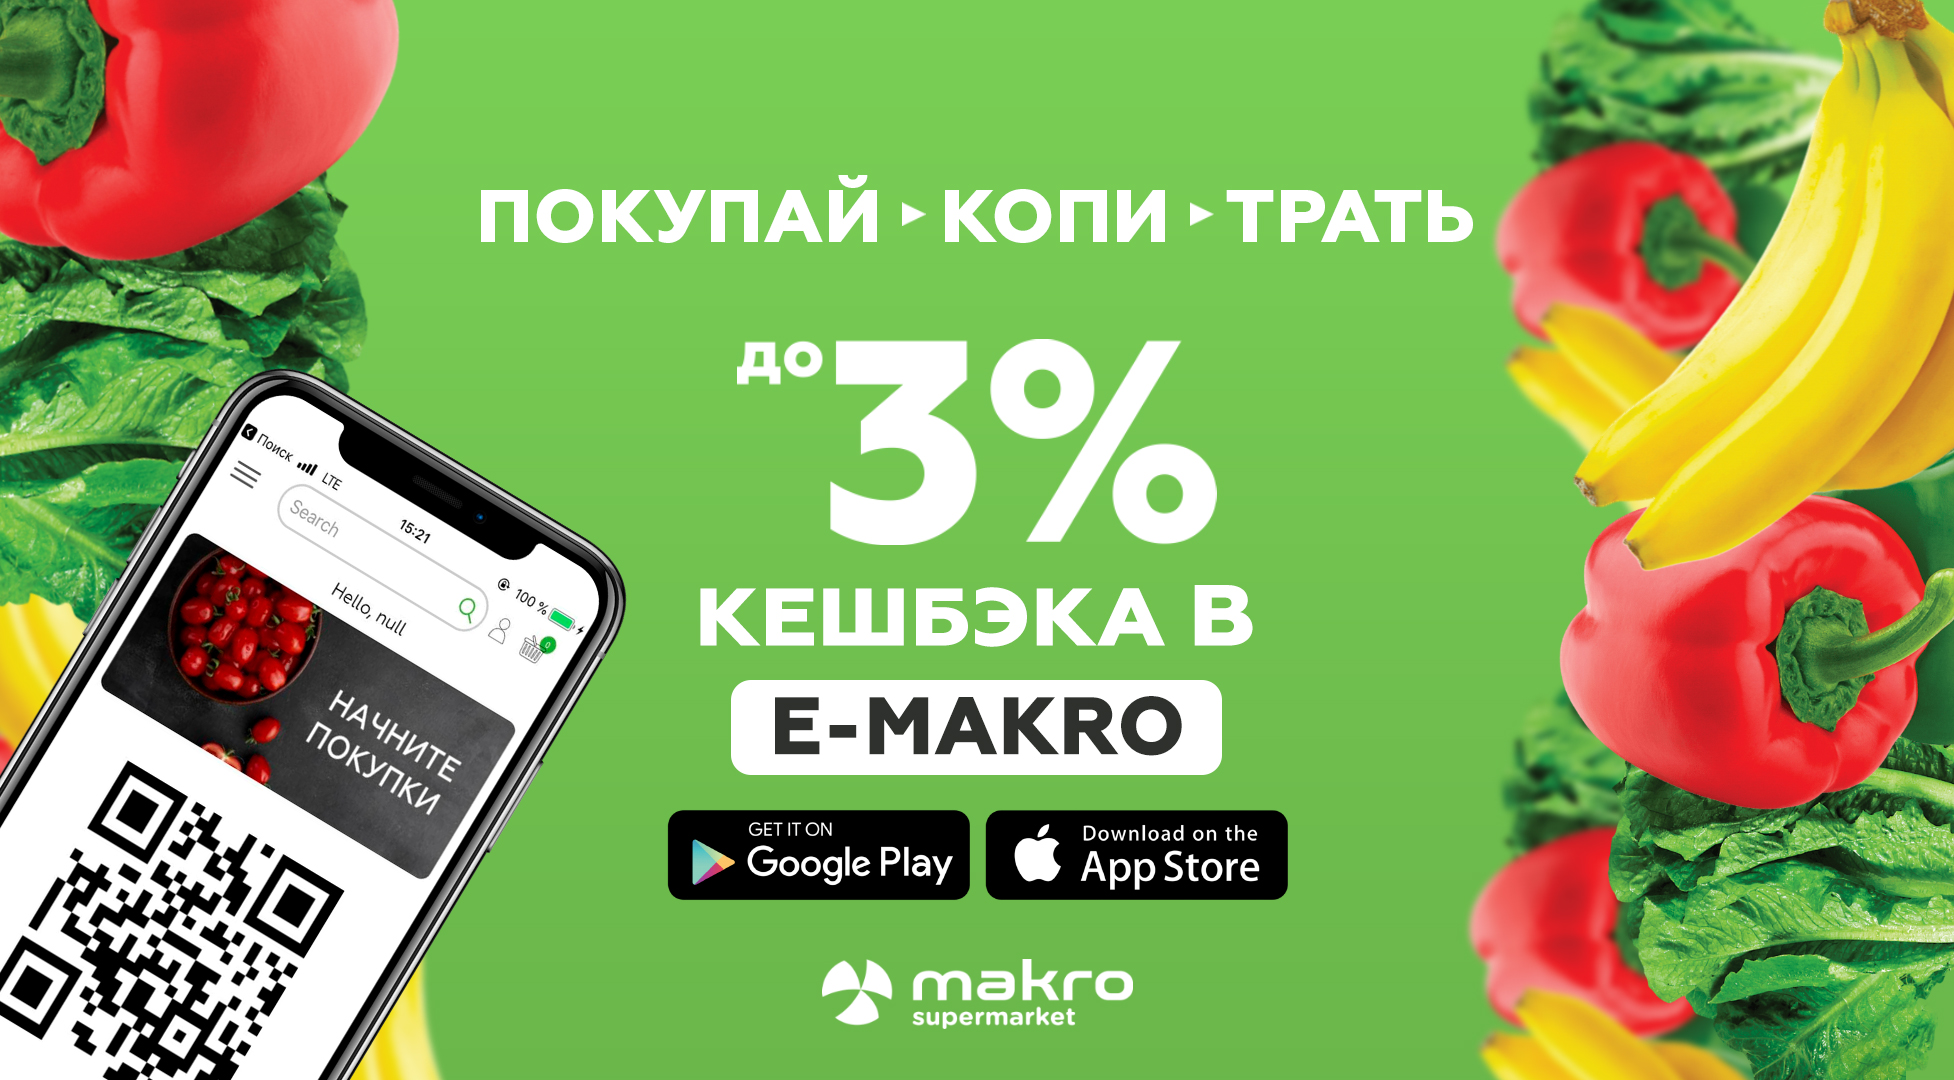 Получайте до 3% кешбэка на счет в приложении E-Makro